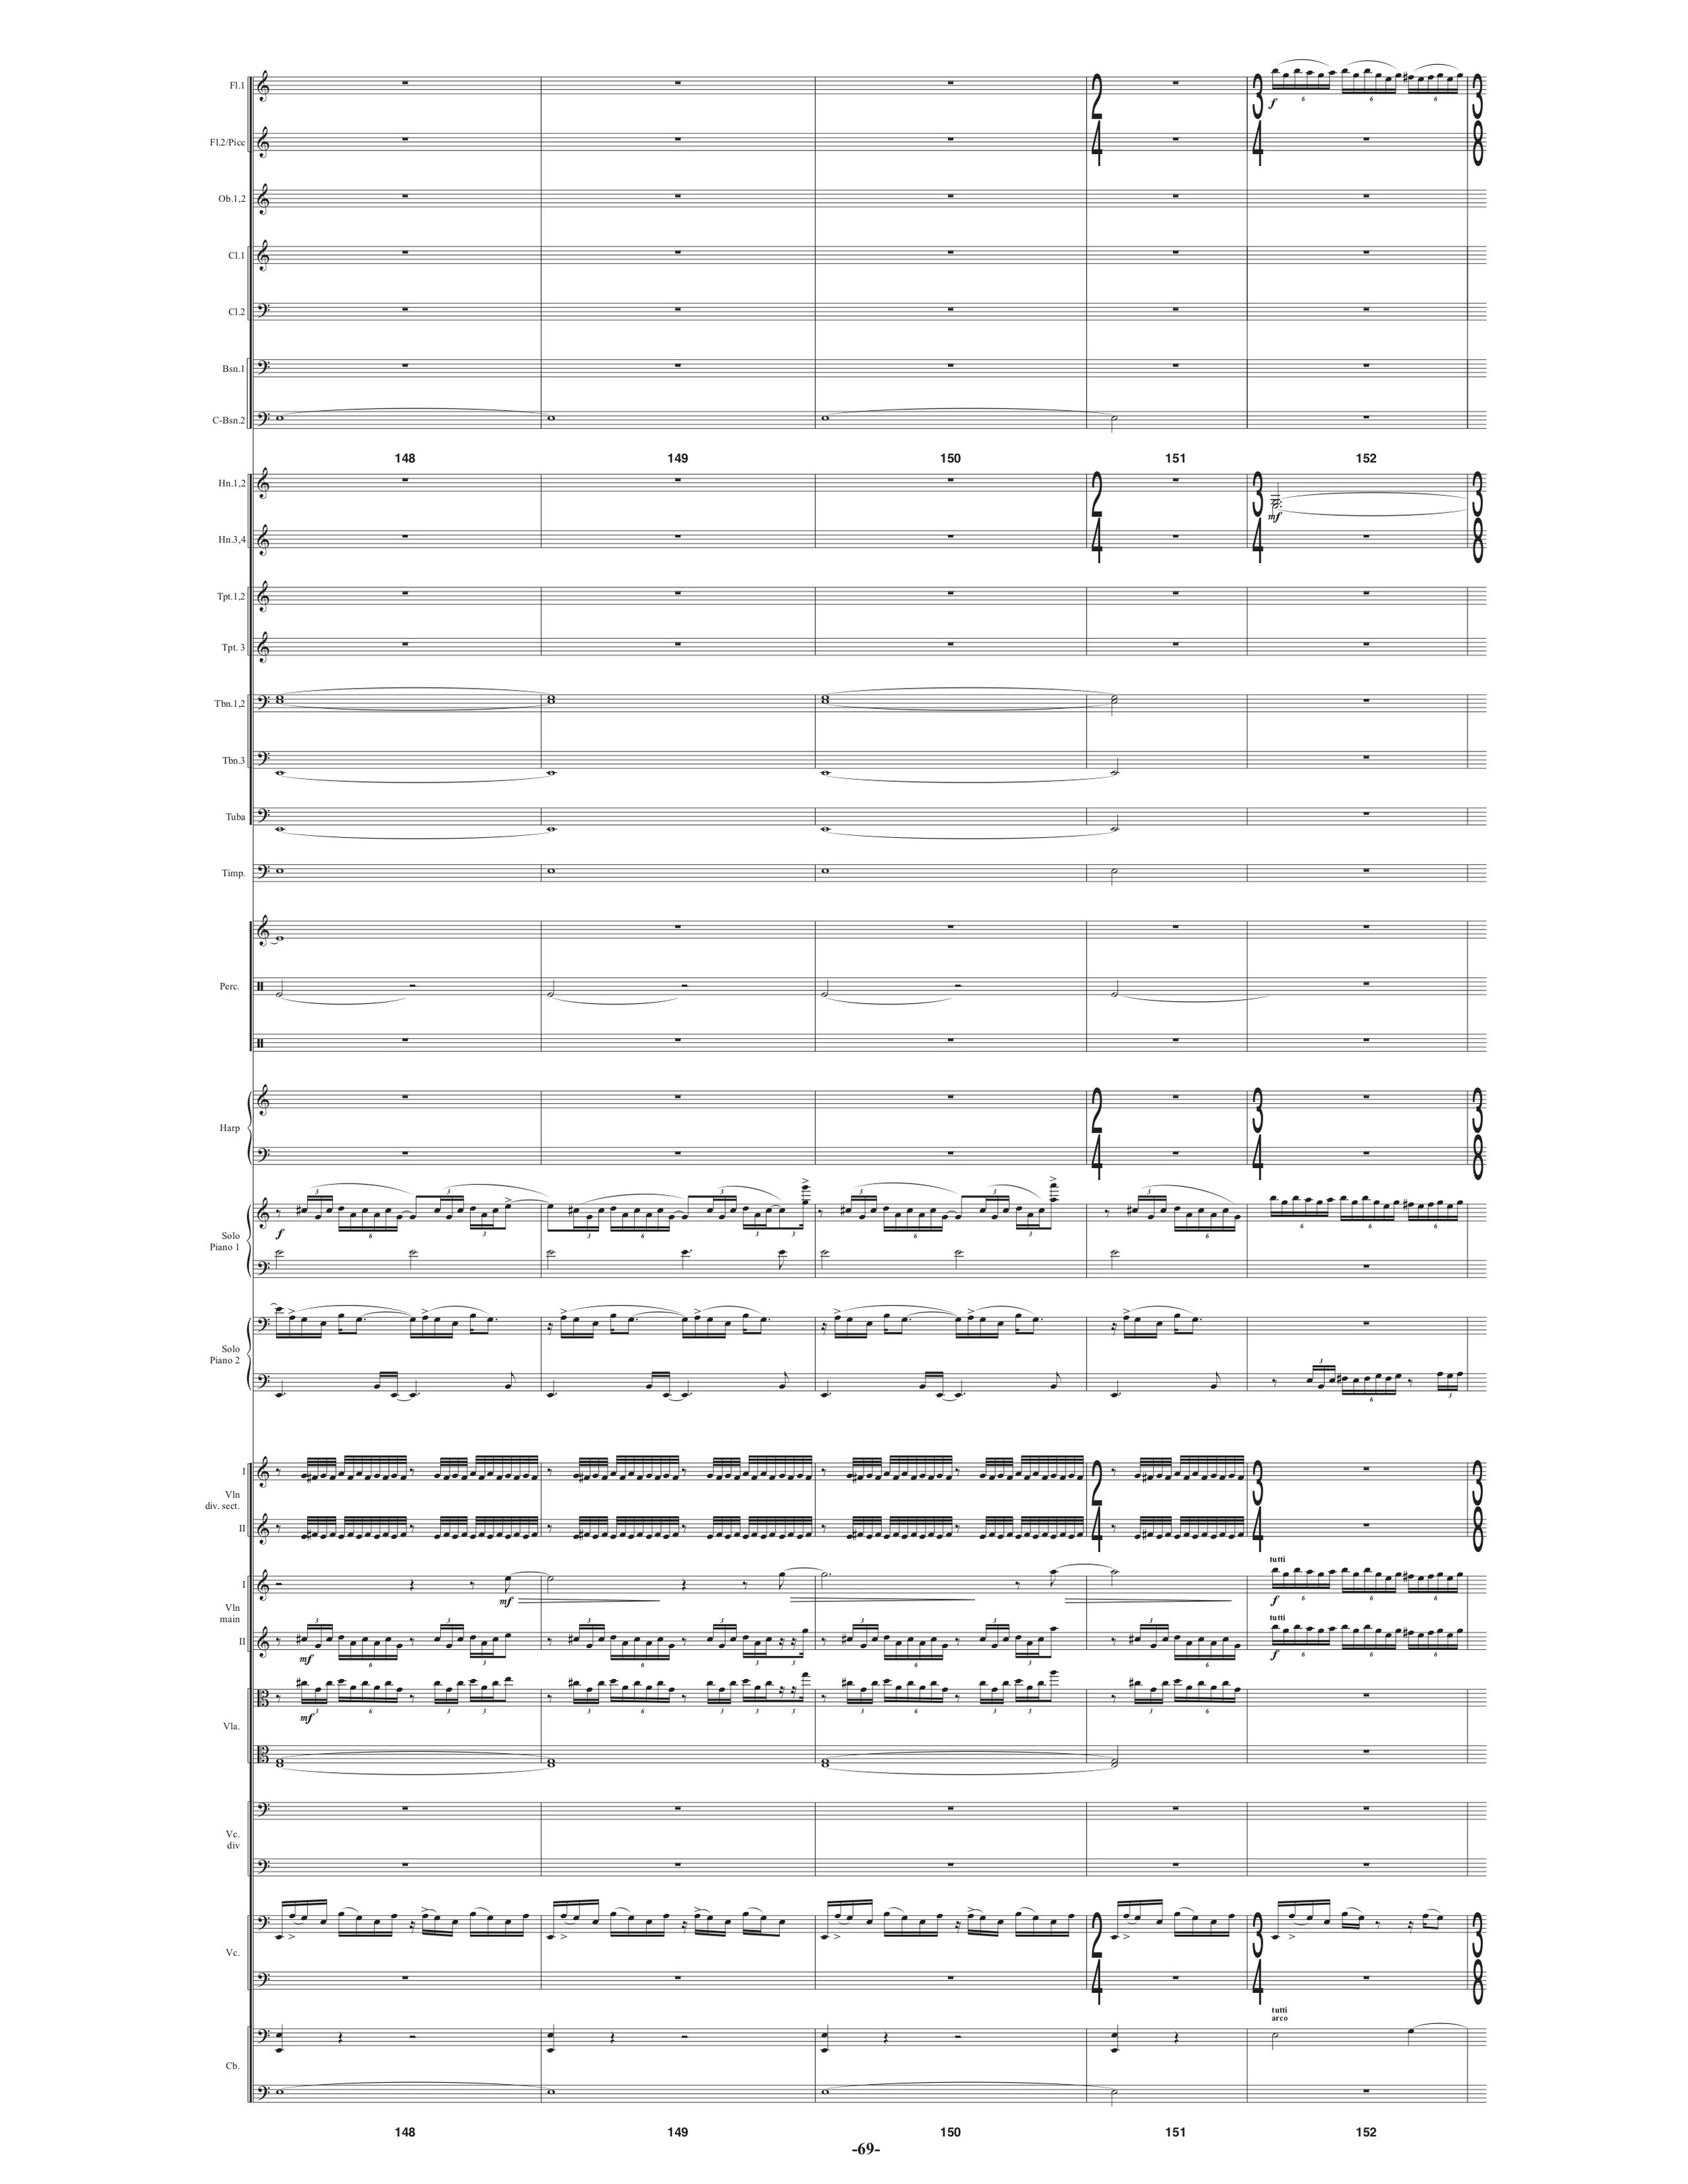 Symphony_Orch & 2 Pianos p74.jpg